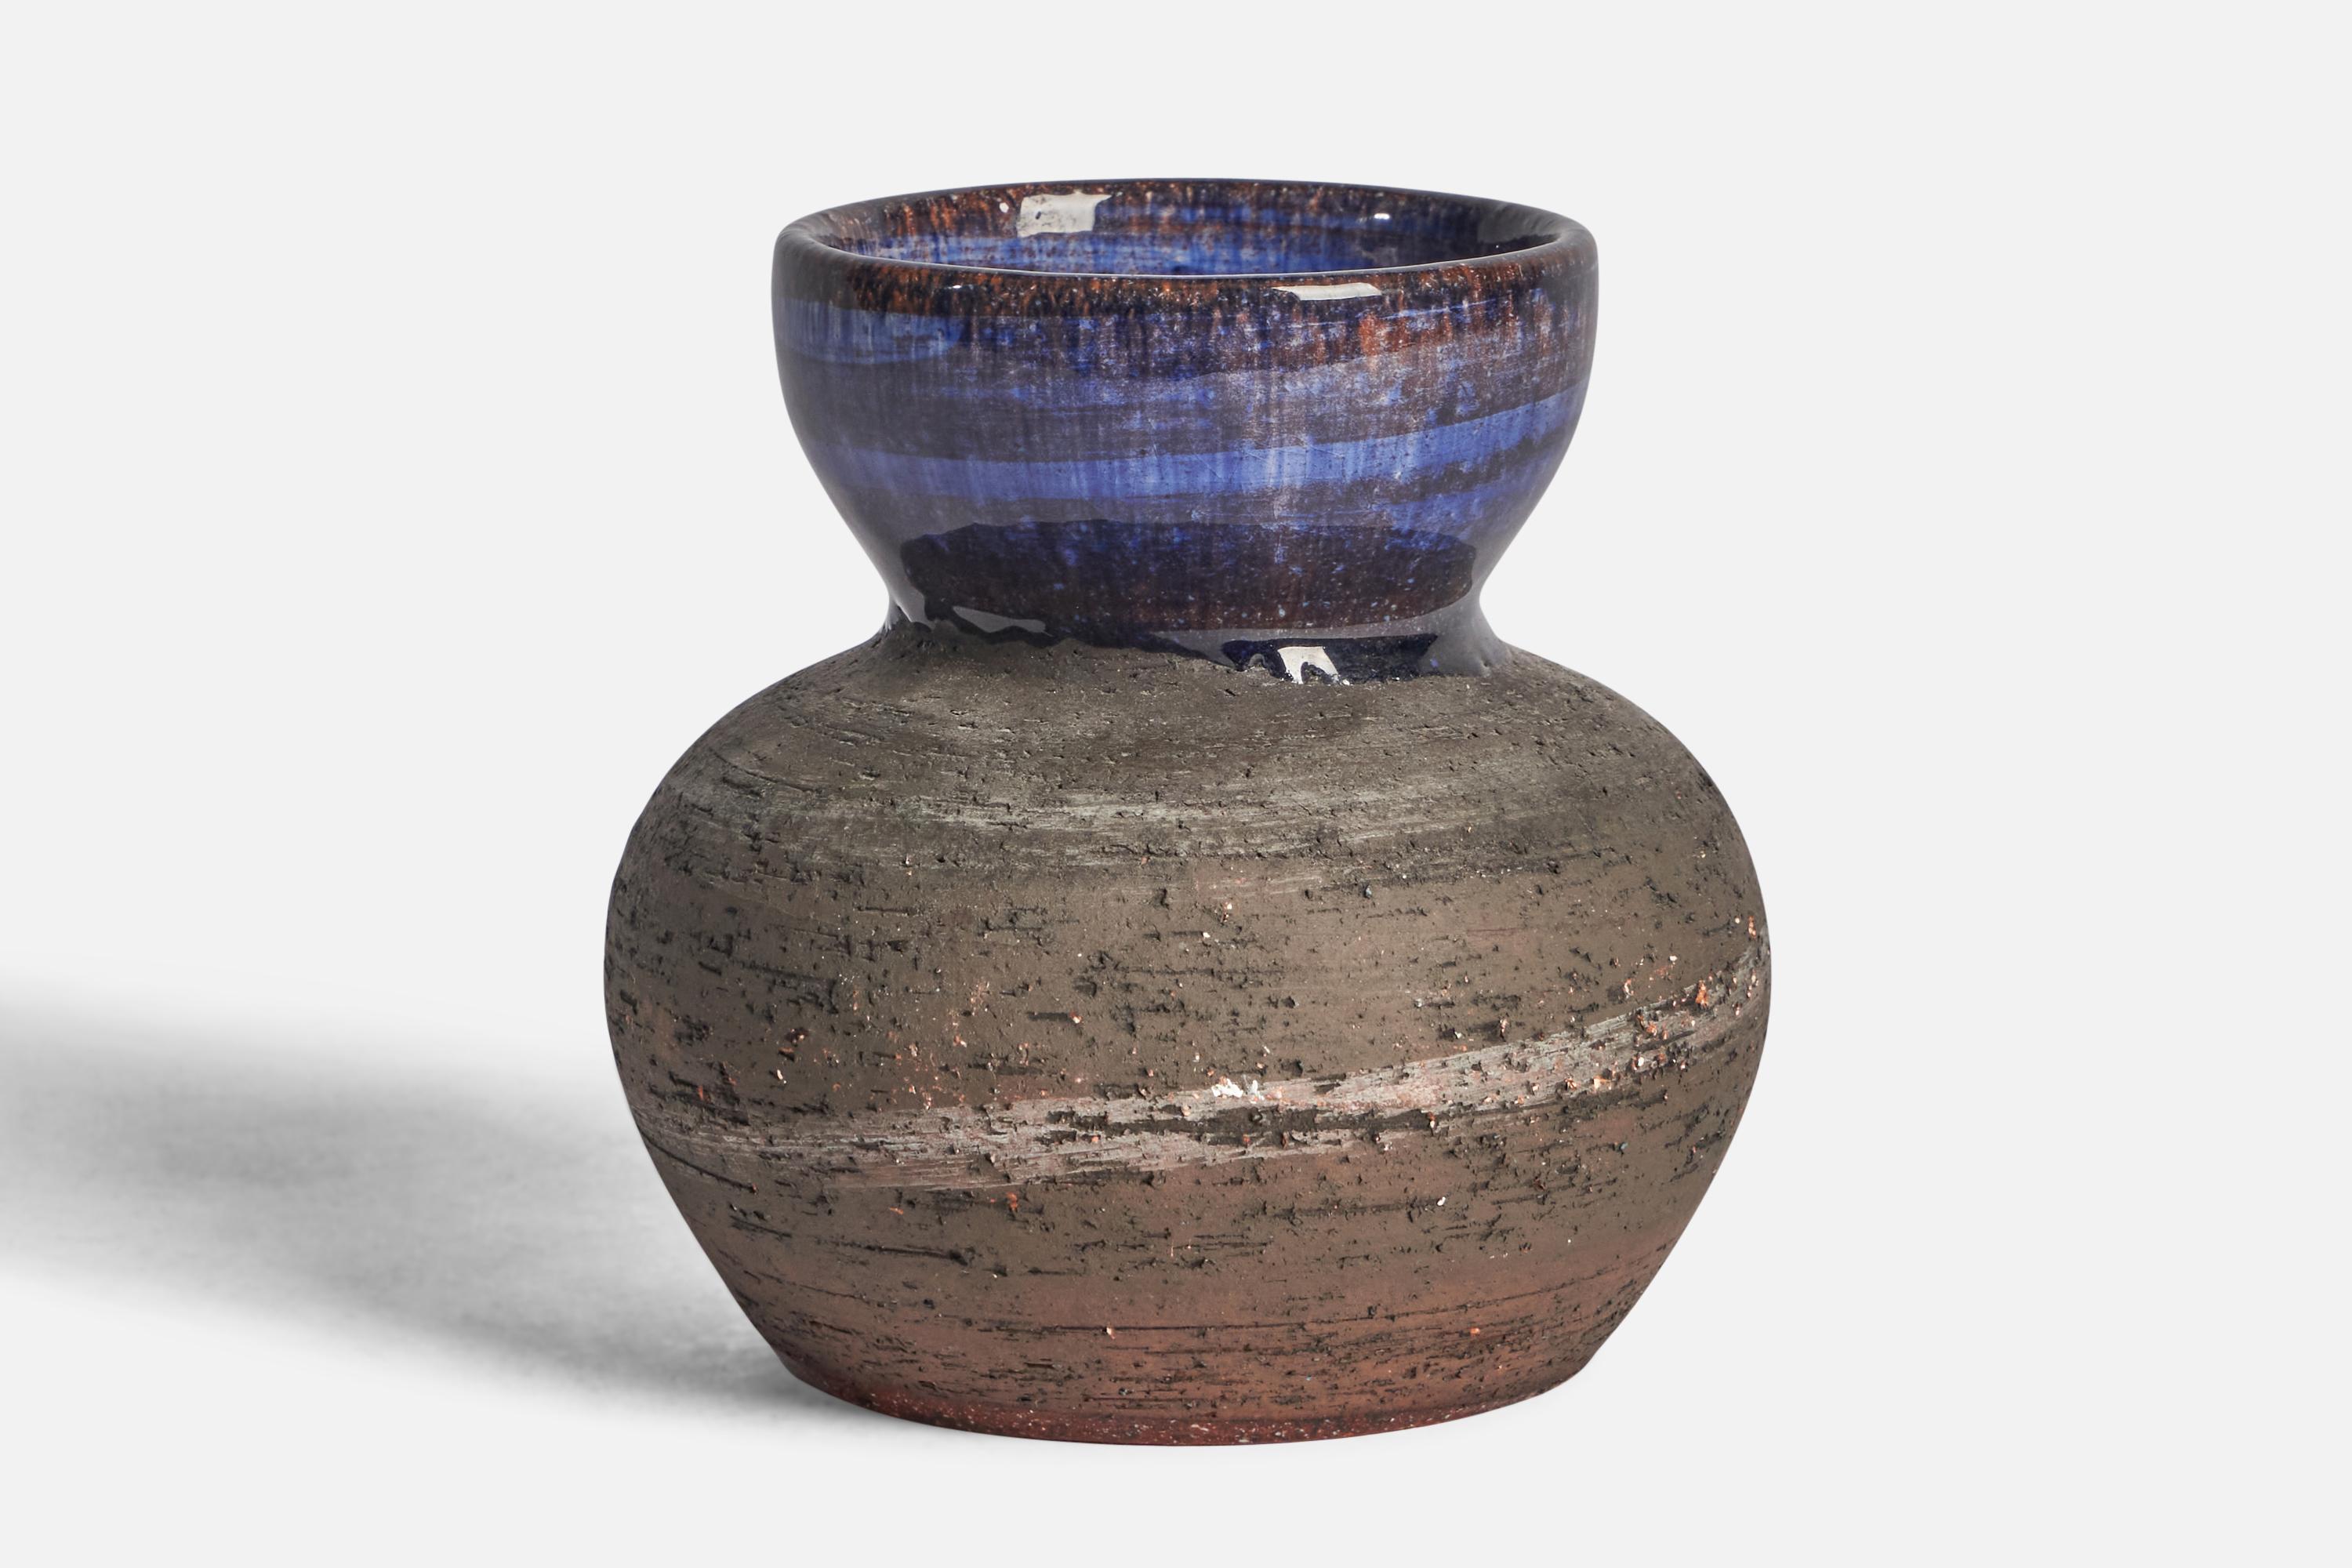 A blue and grey semi-glazed vase designed and produced by Gustav & Ulla Kraitz, Sweden, c. 1970s

“KRAITZ” written on bottom